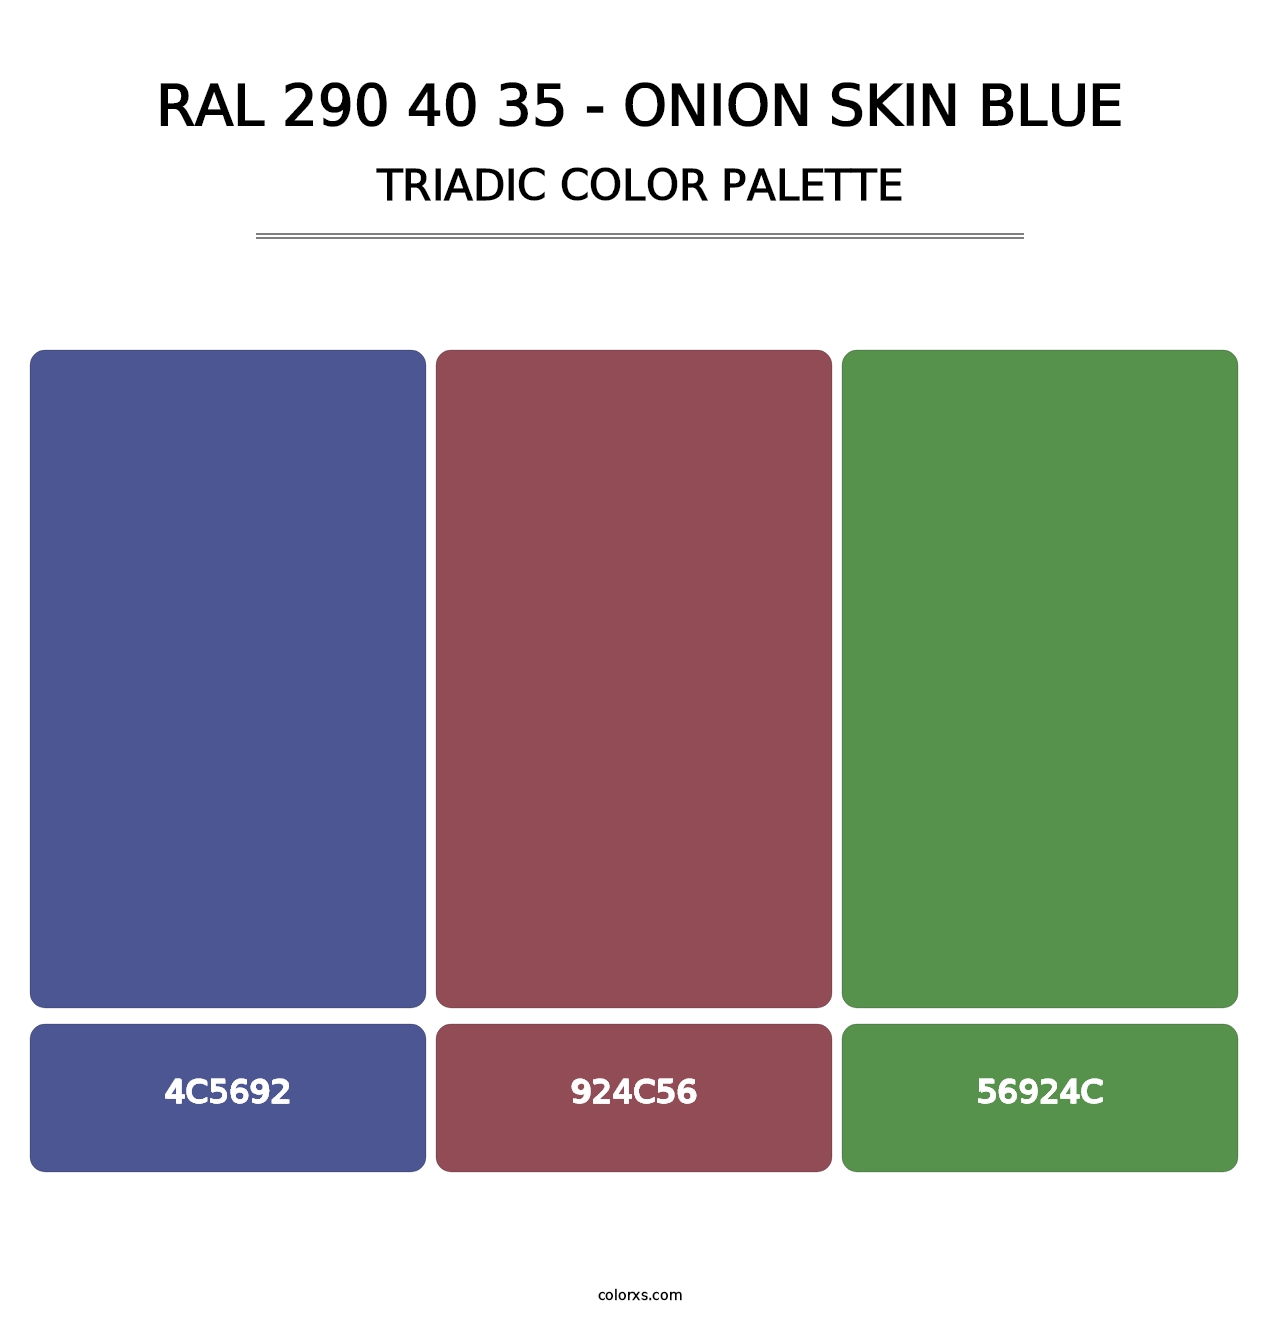 RAL 290 40 35 - Onion Skin Blue - Triadic Color Palette